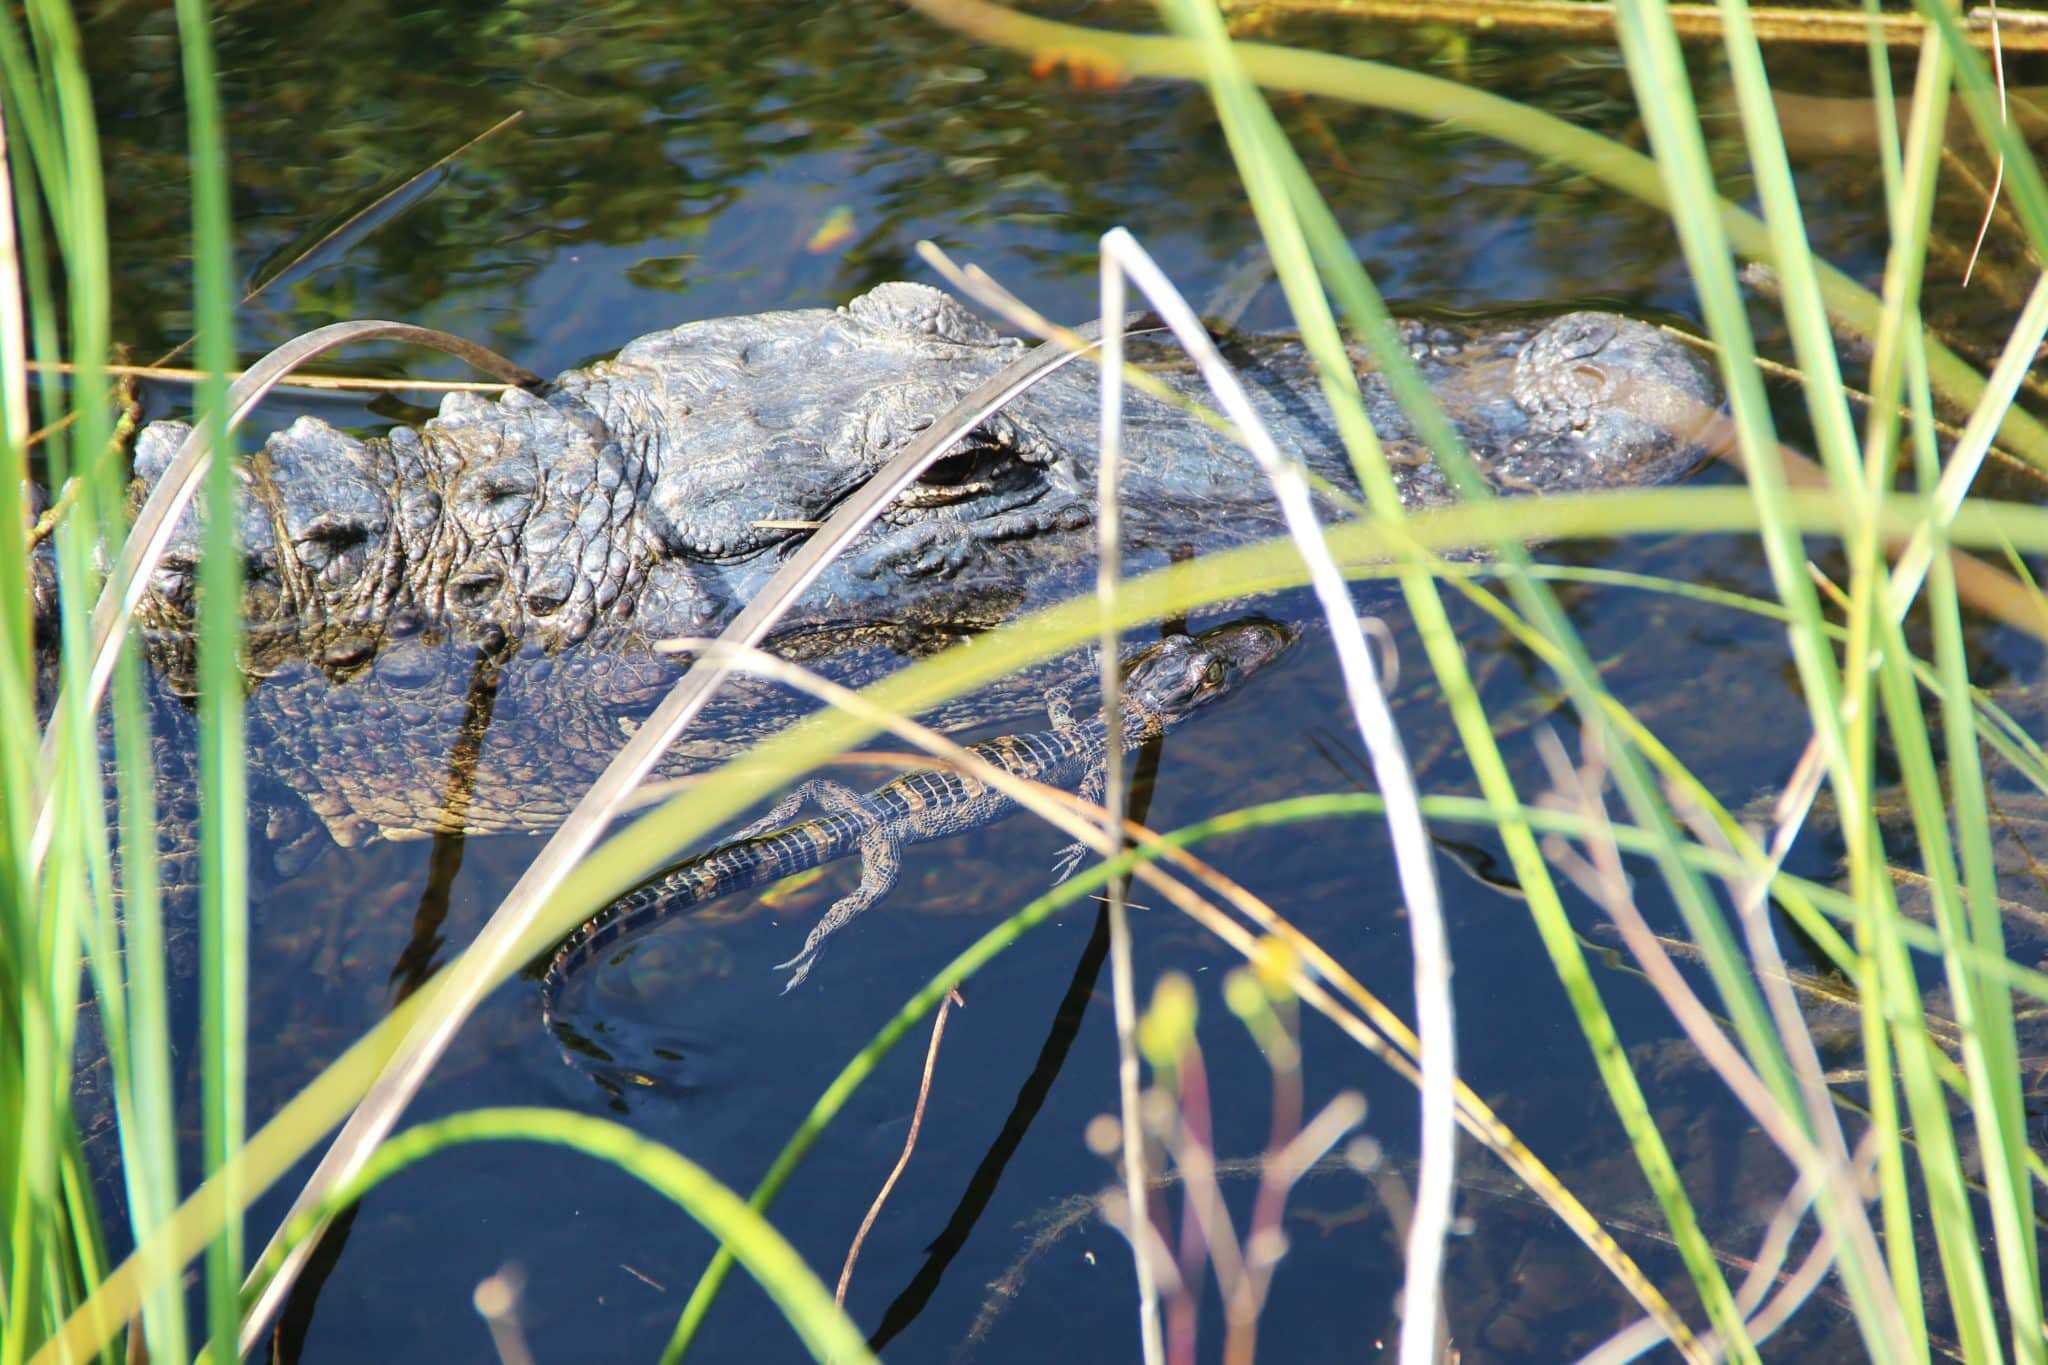 An alligator in a marsh.